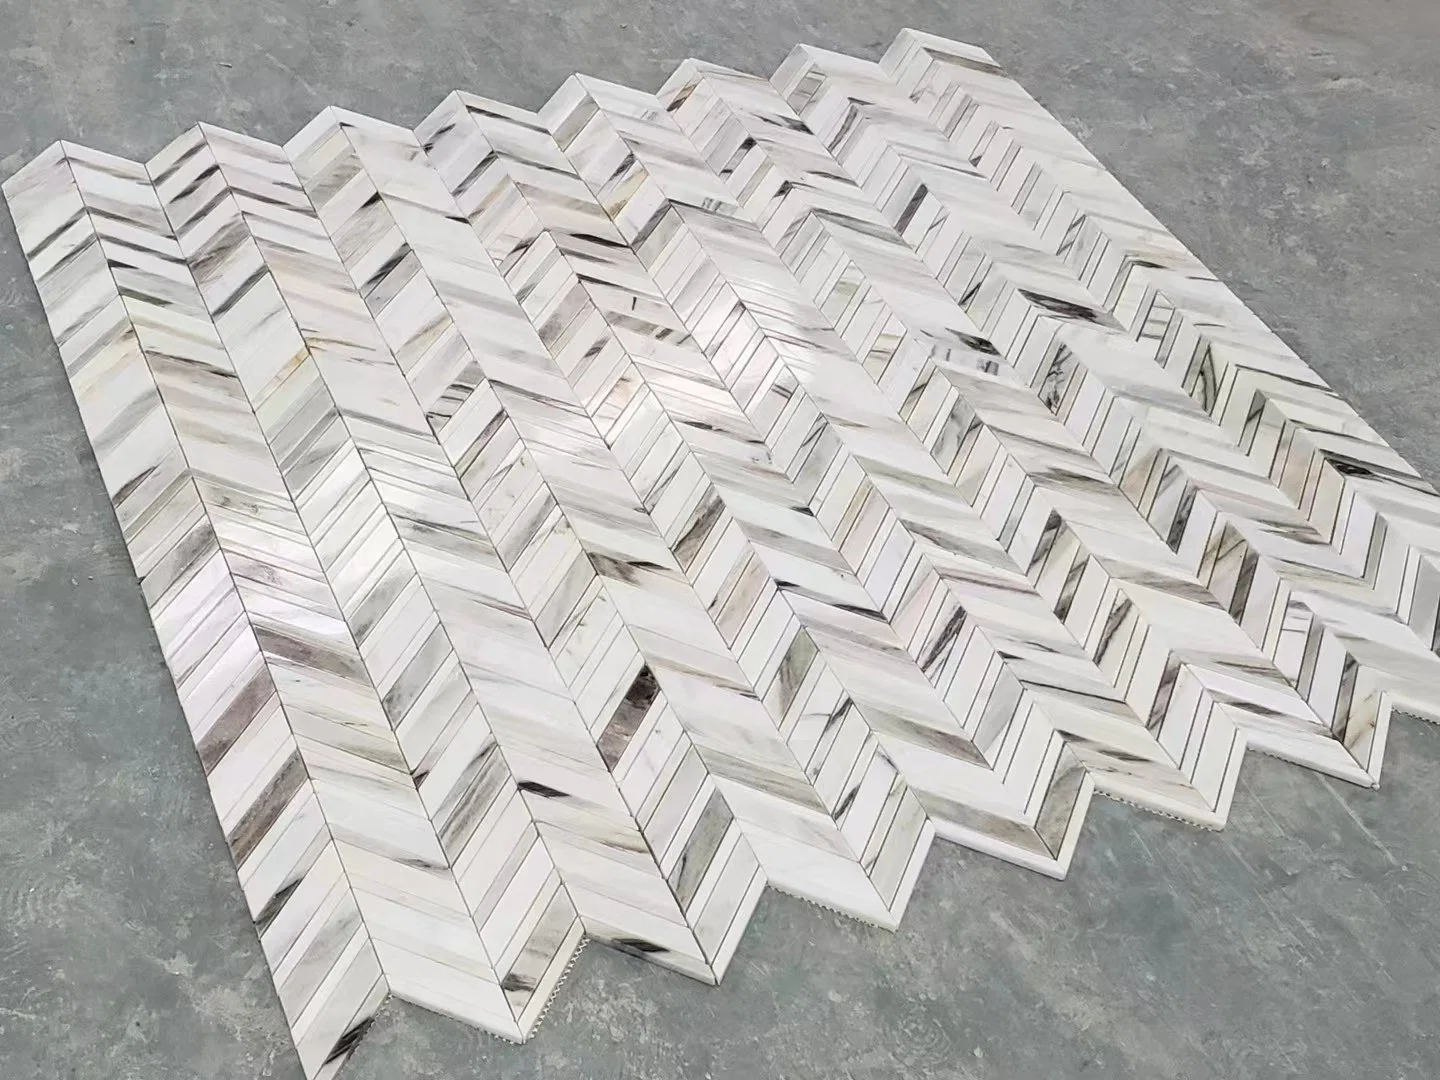 Building Material From China Ceramic Tile Floor Tile Bathroom Tile Mosaic Tile Marble Tile Flooring Tile Stone Tile Stone Mosaic